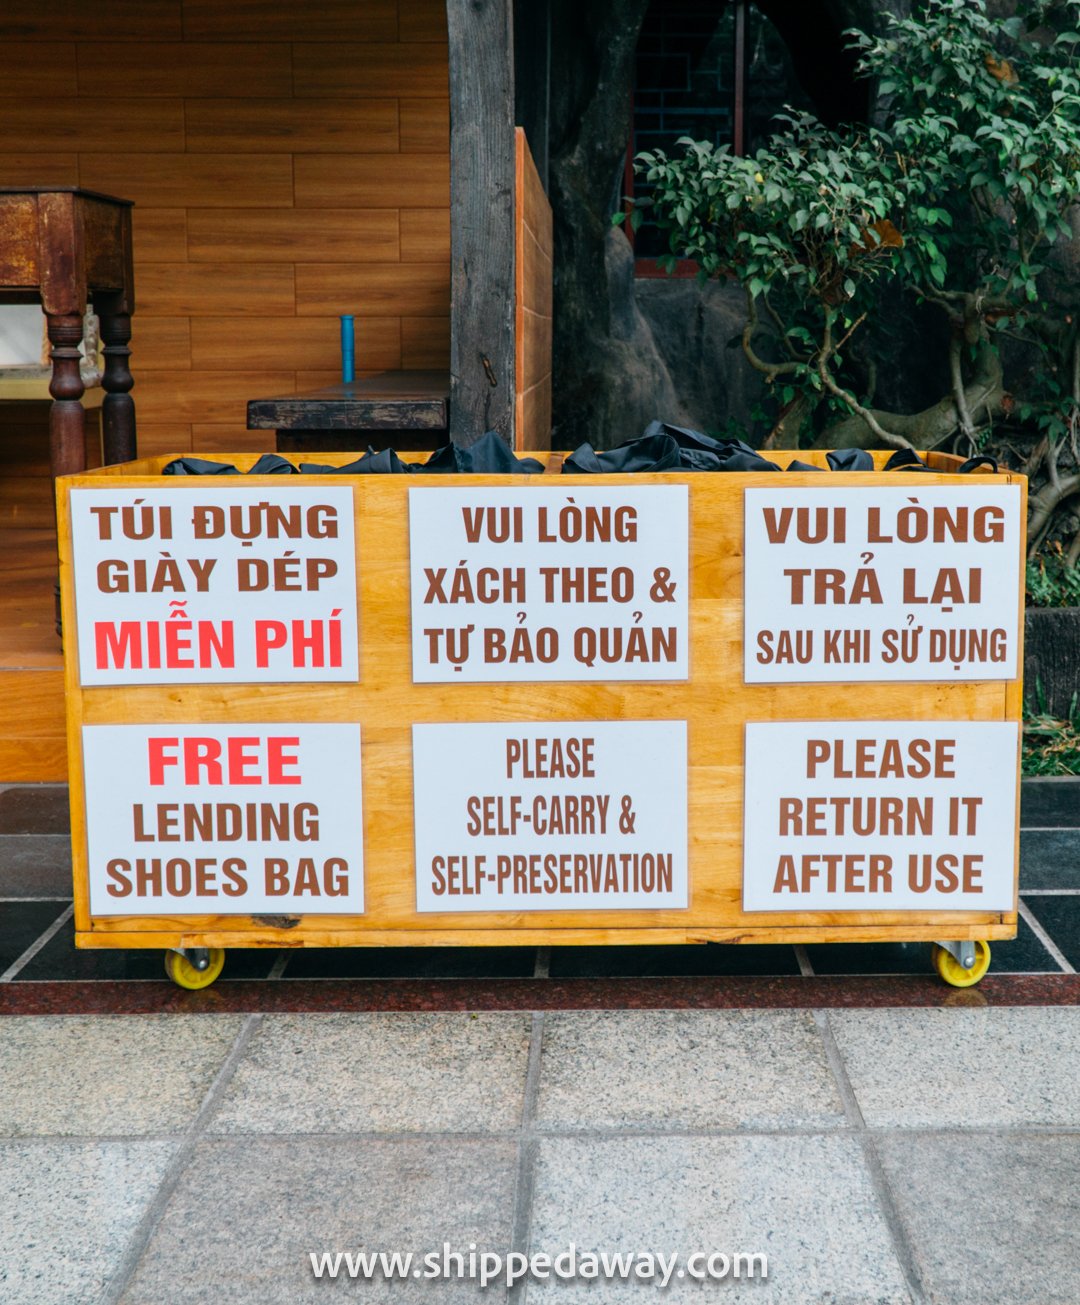 Free shoes bag at Buu Long Pagoda in Ho Chi Minh City in Vietnam